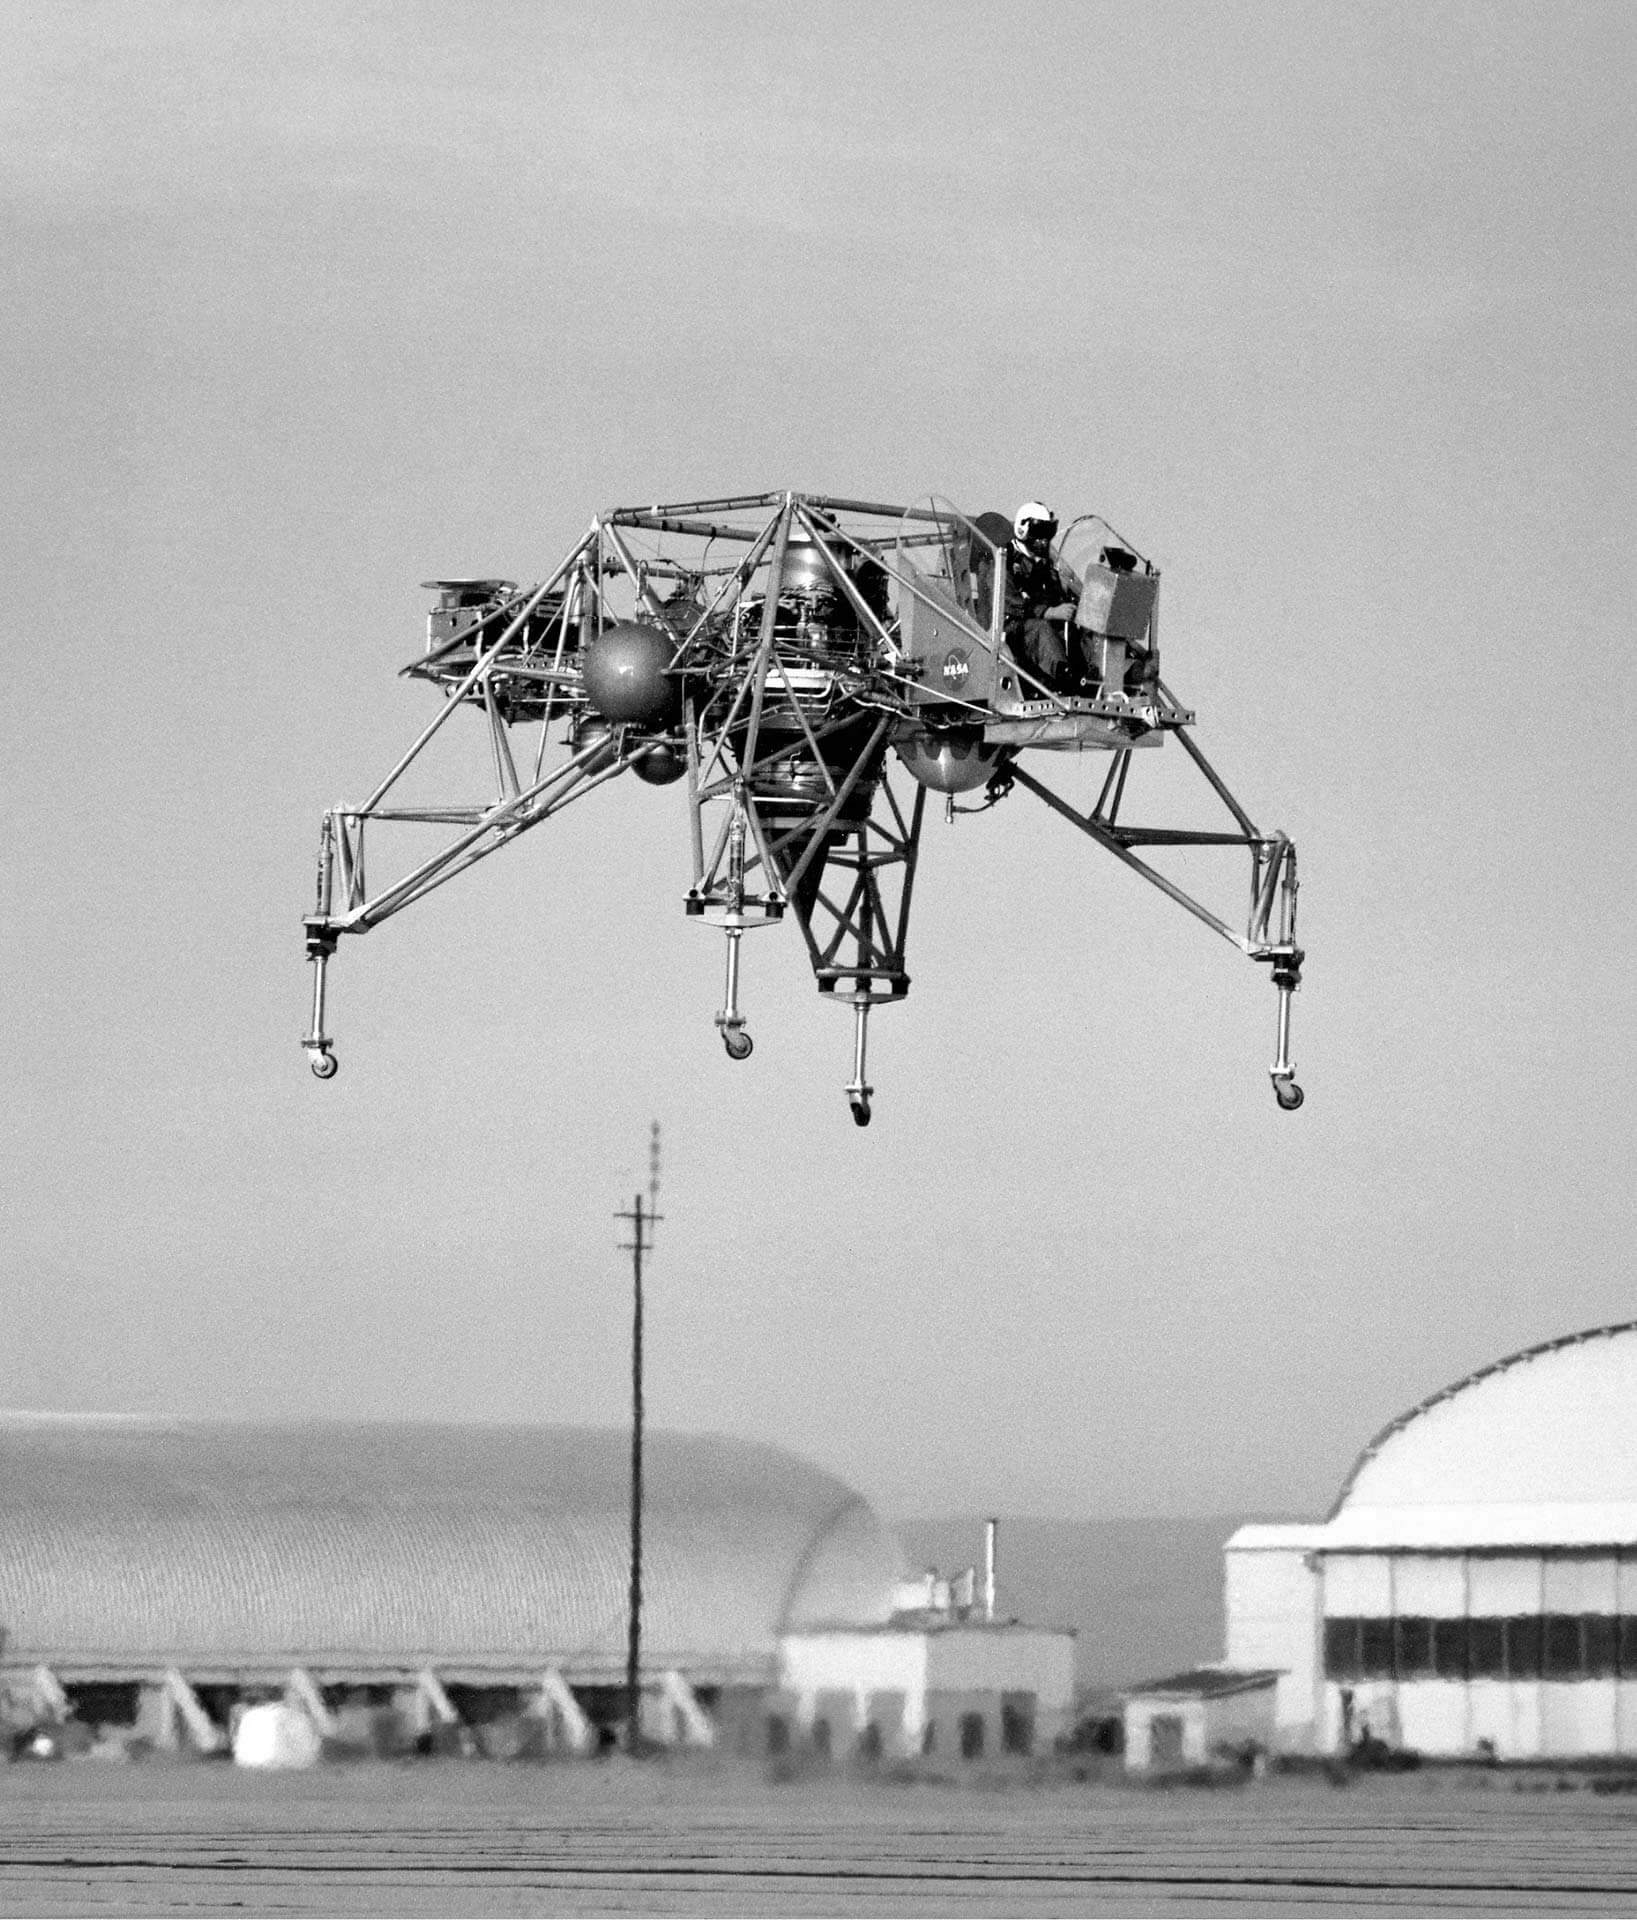 Image of the Lunar landing test flight vehicle